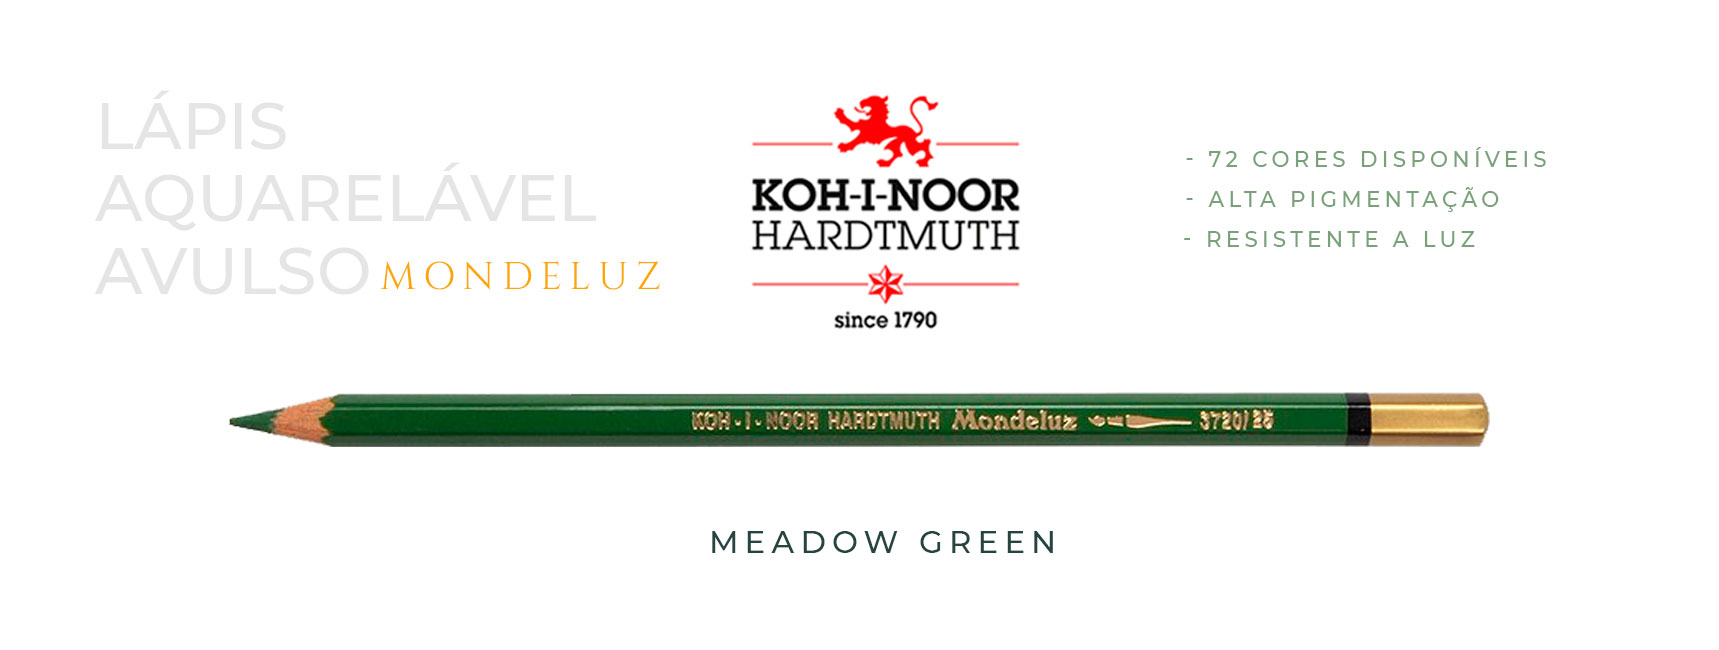 Lápis aquarelável avulso meadow green koh-i-noor